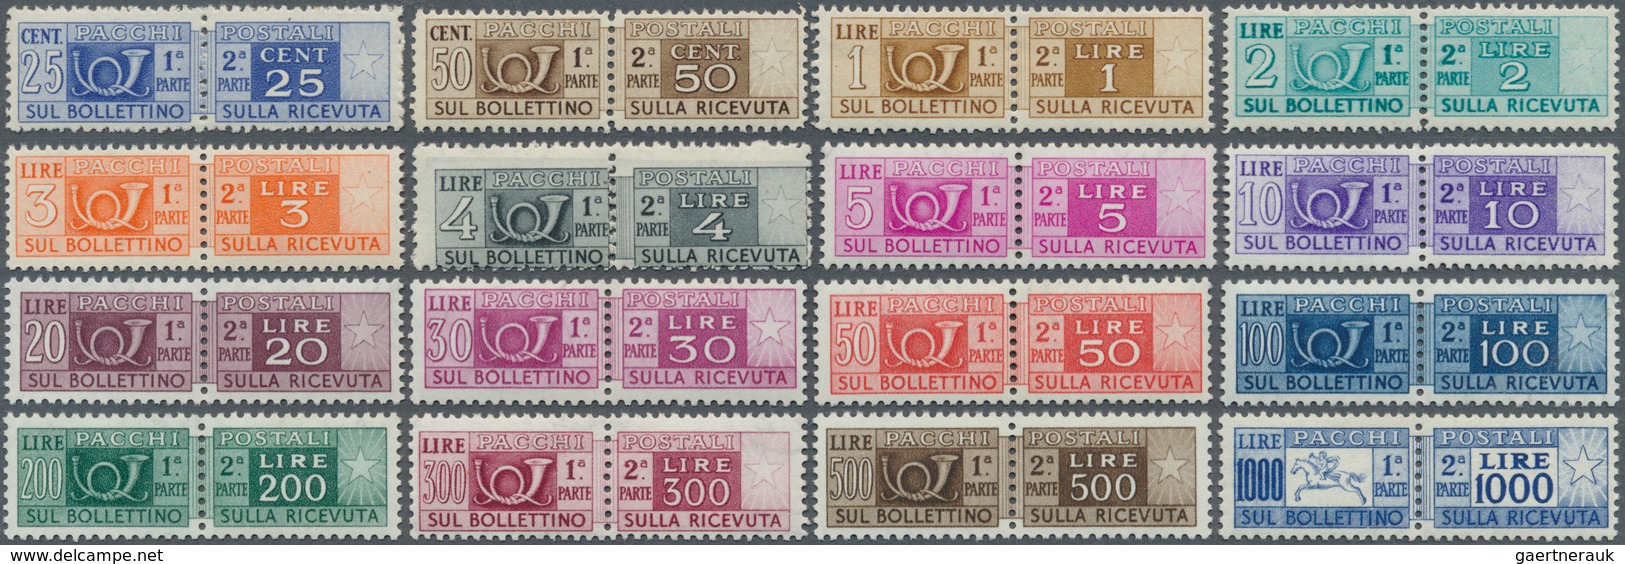 01003 Italien - Paketmarken: 1946/1954, "Post Horn/Cavallino/Cypher" Wm. "Winged Wheel", 25c. To 1000l. Co - Postal Parcels